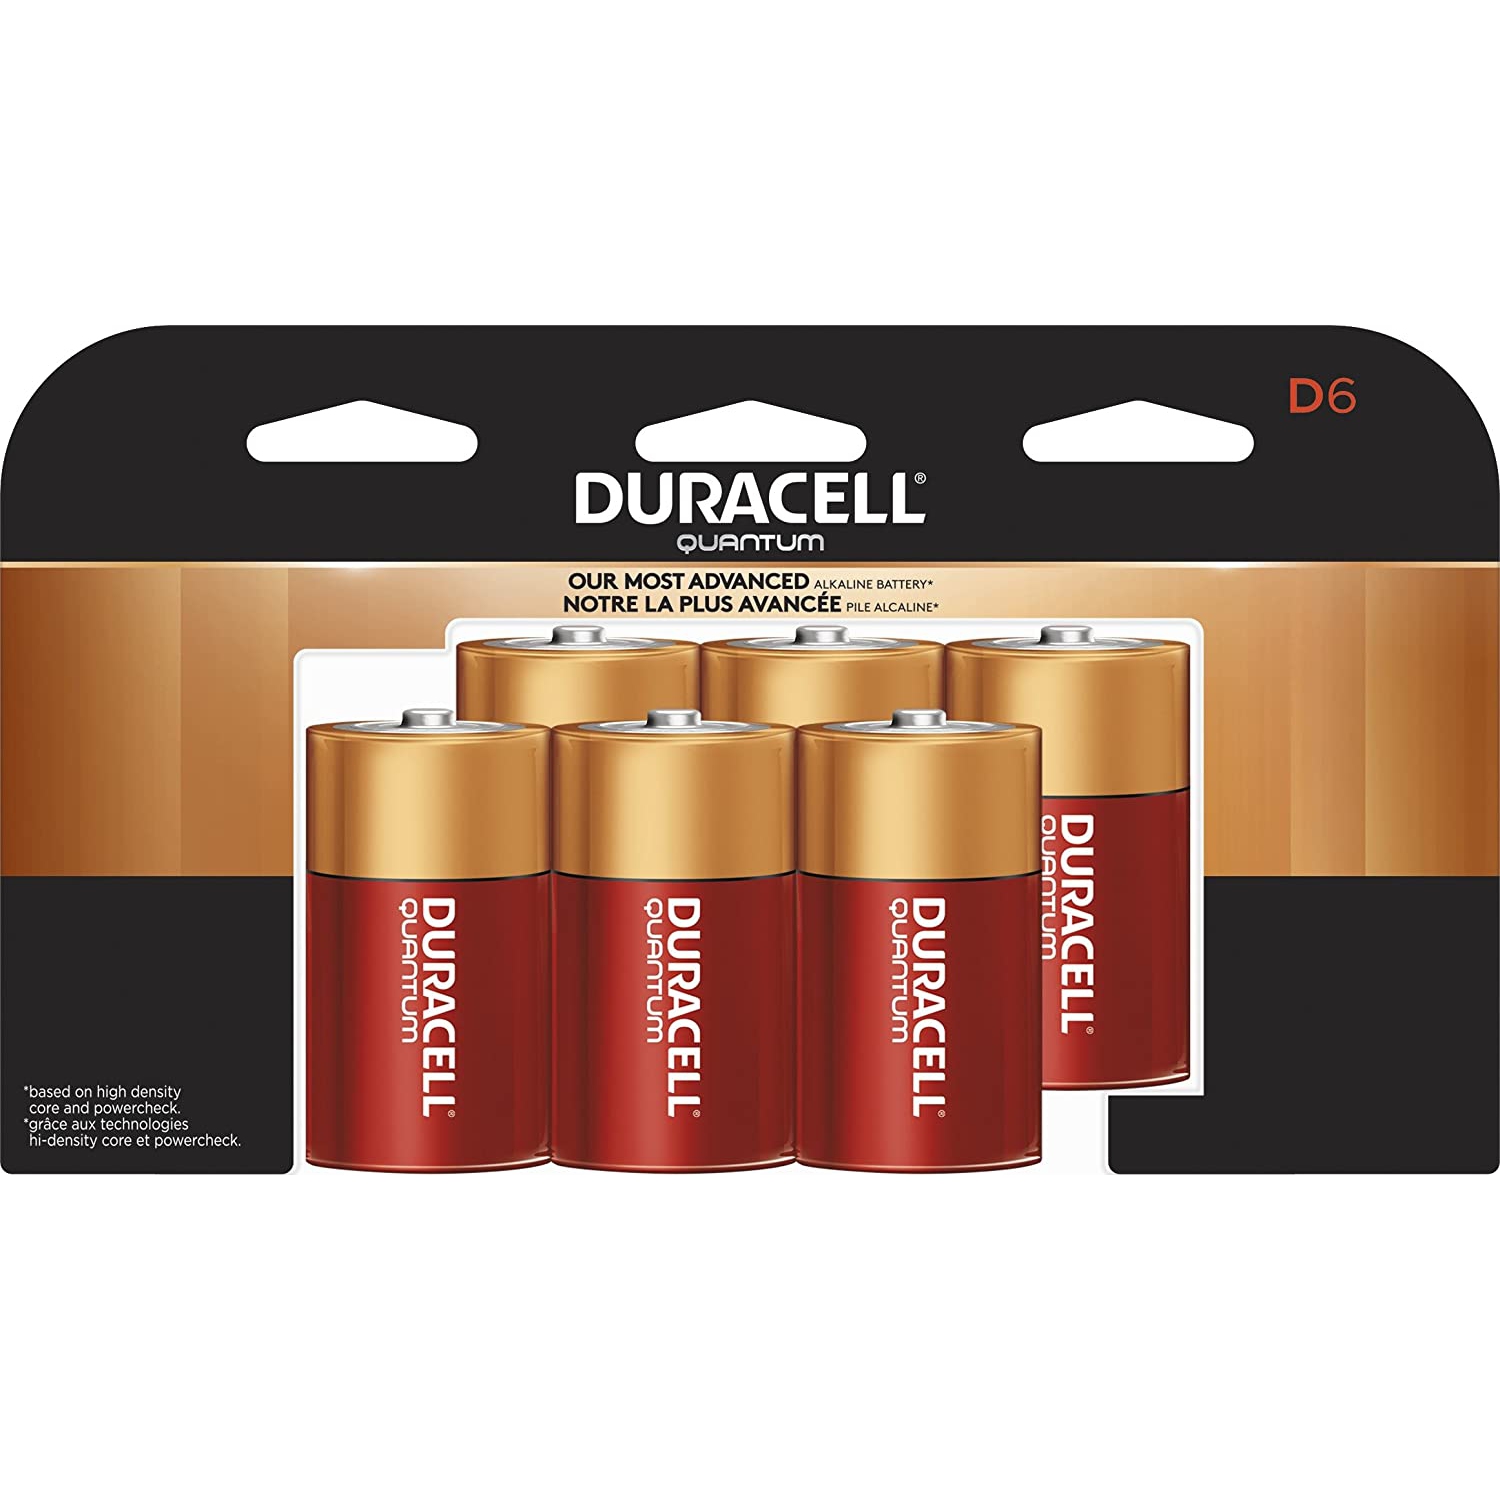 D Battery. Long-lasting photo Batteries.